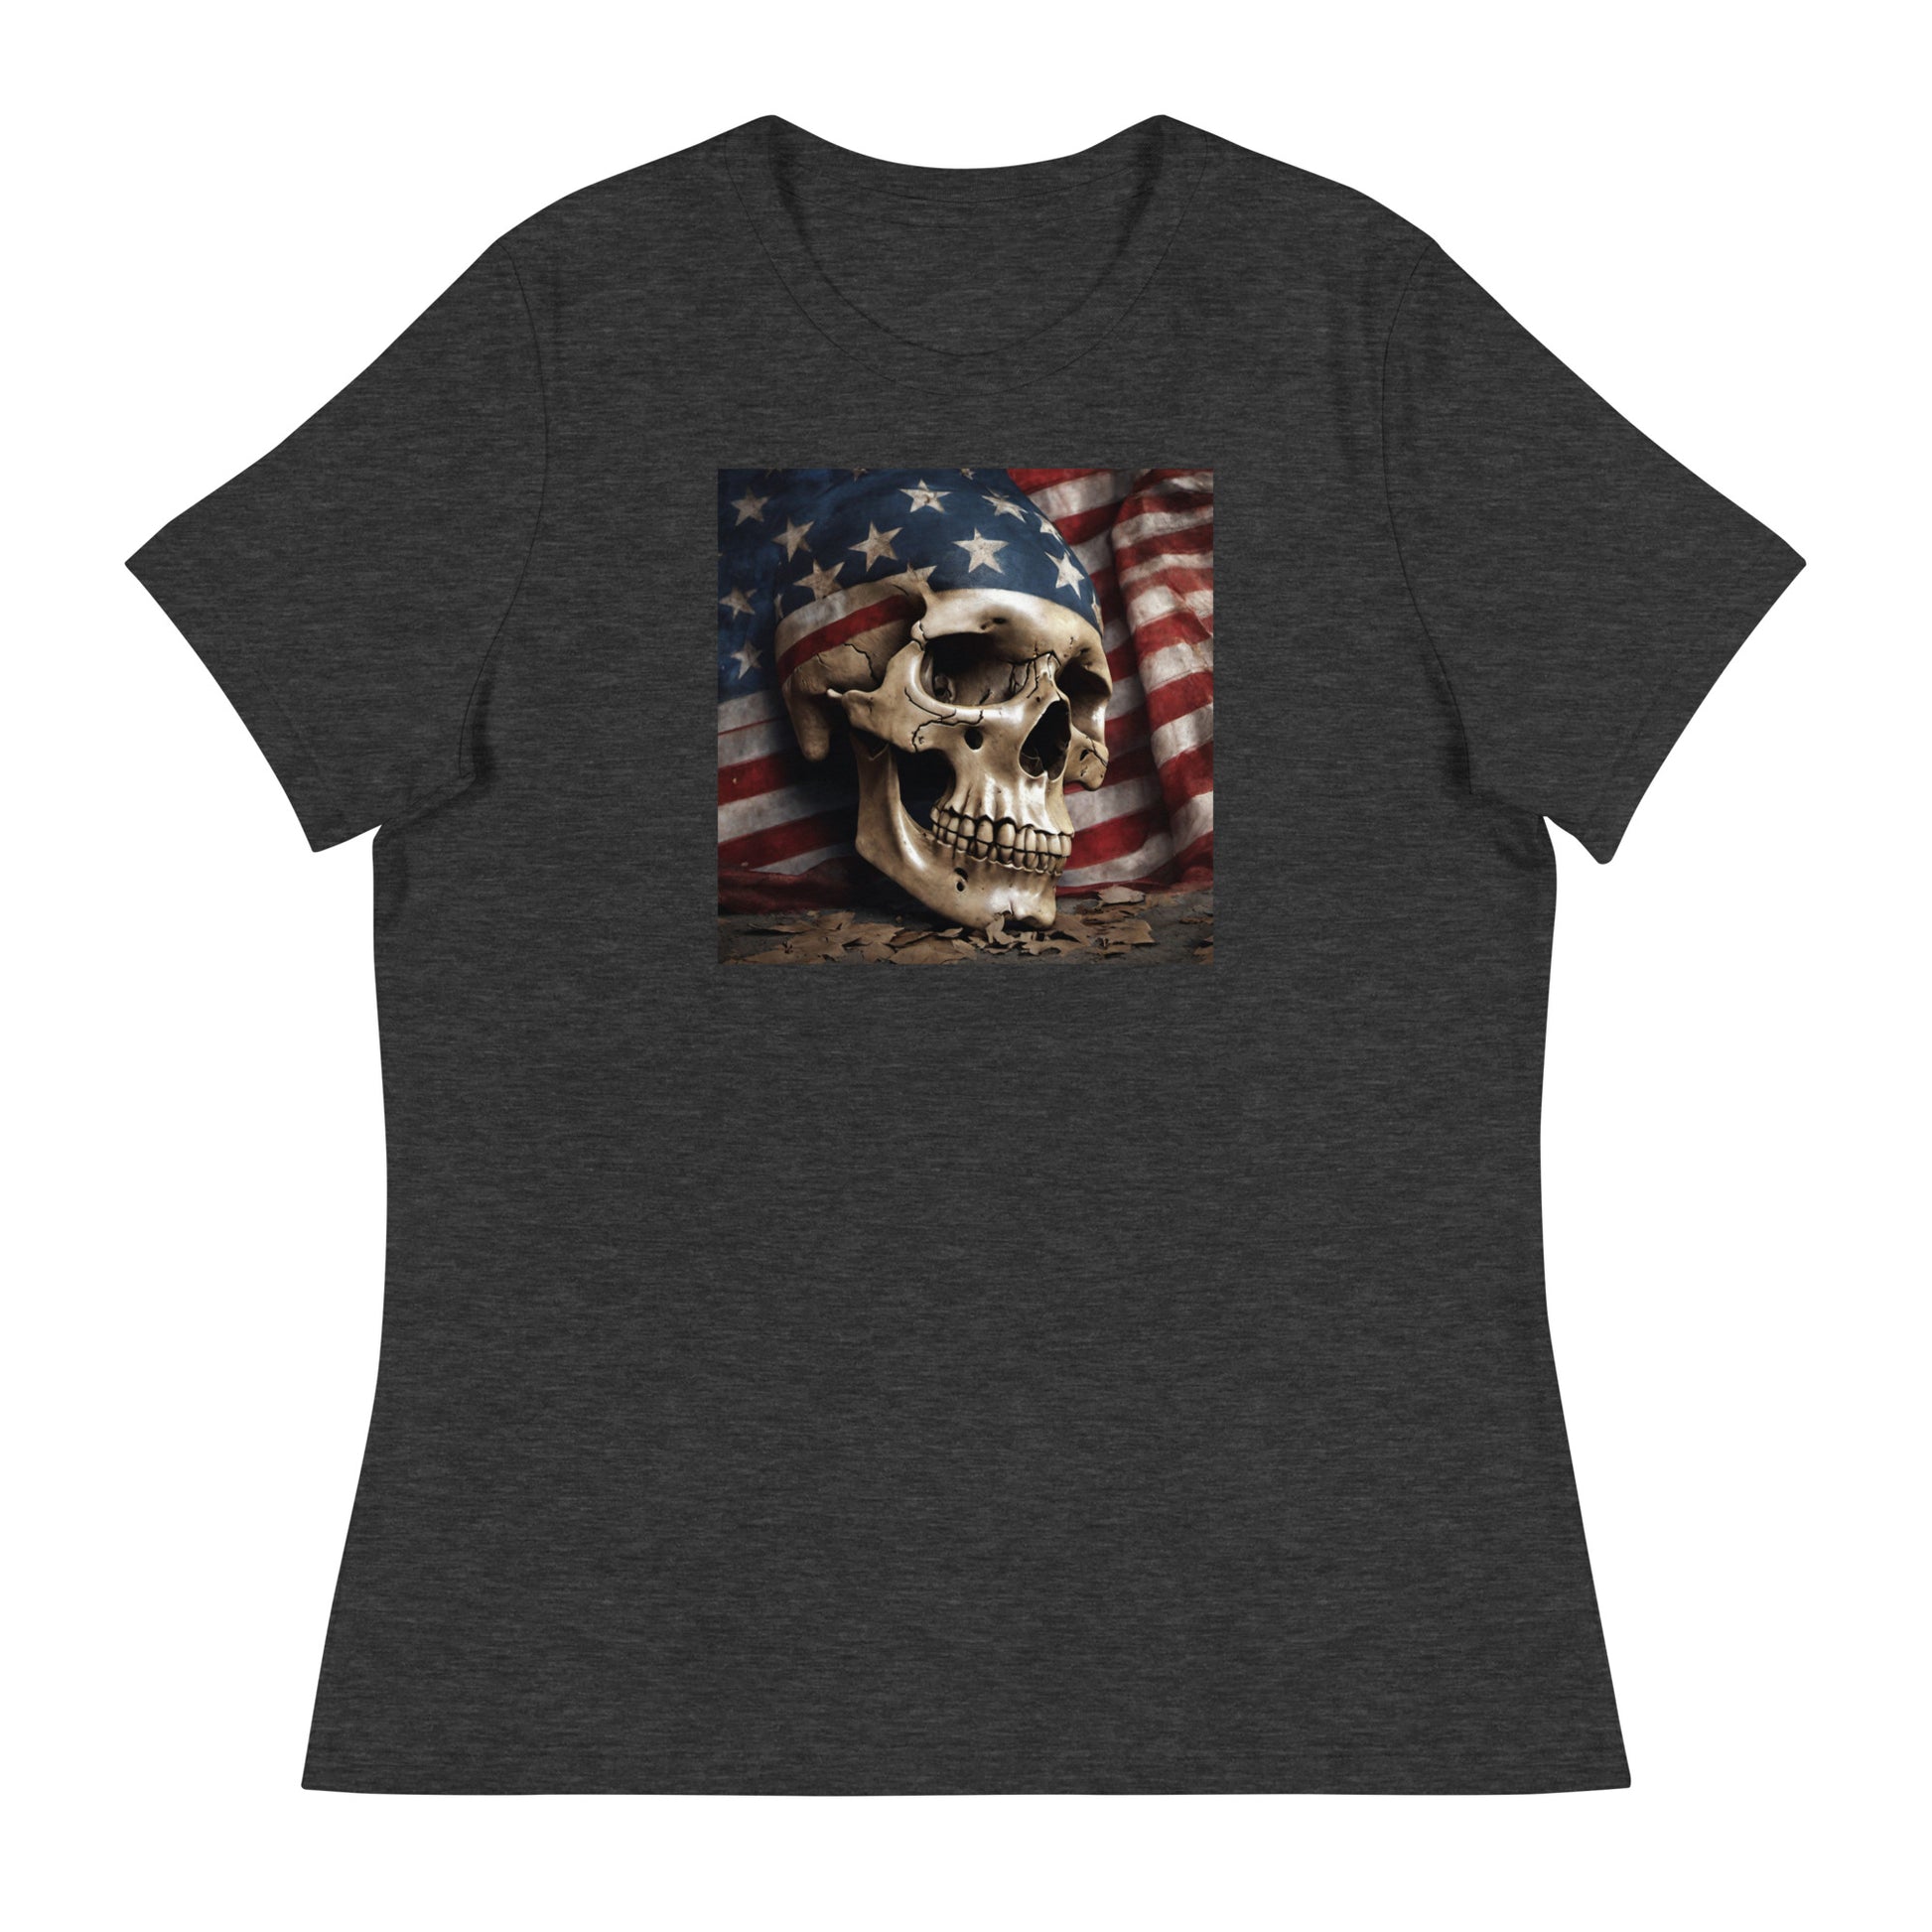 Skull and Flag Print Women's T-Shirt Dark Grey Heather